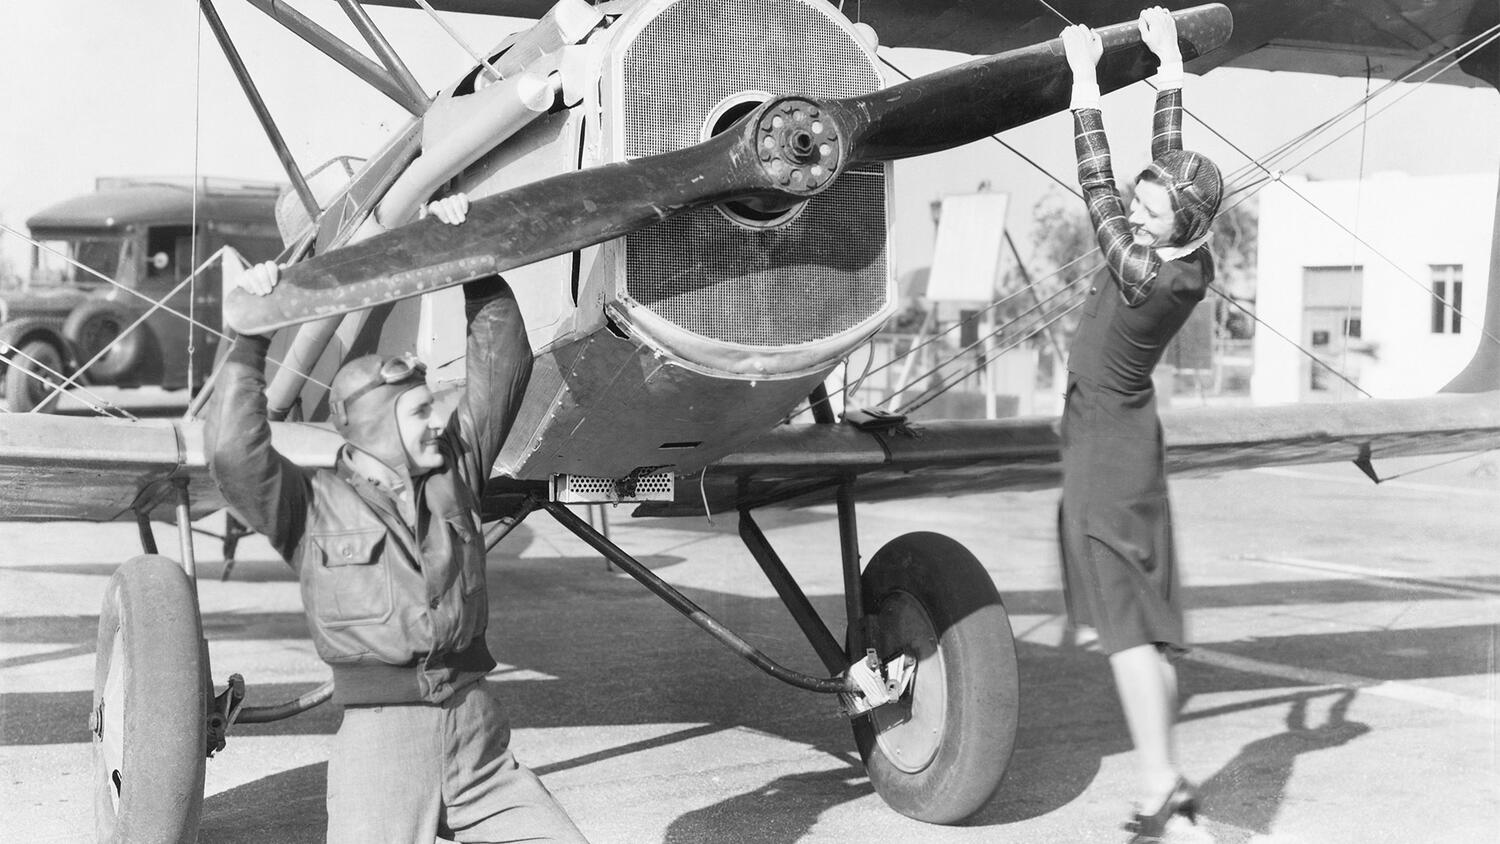 vintage-foto-man-vrouw-vliegtuig